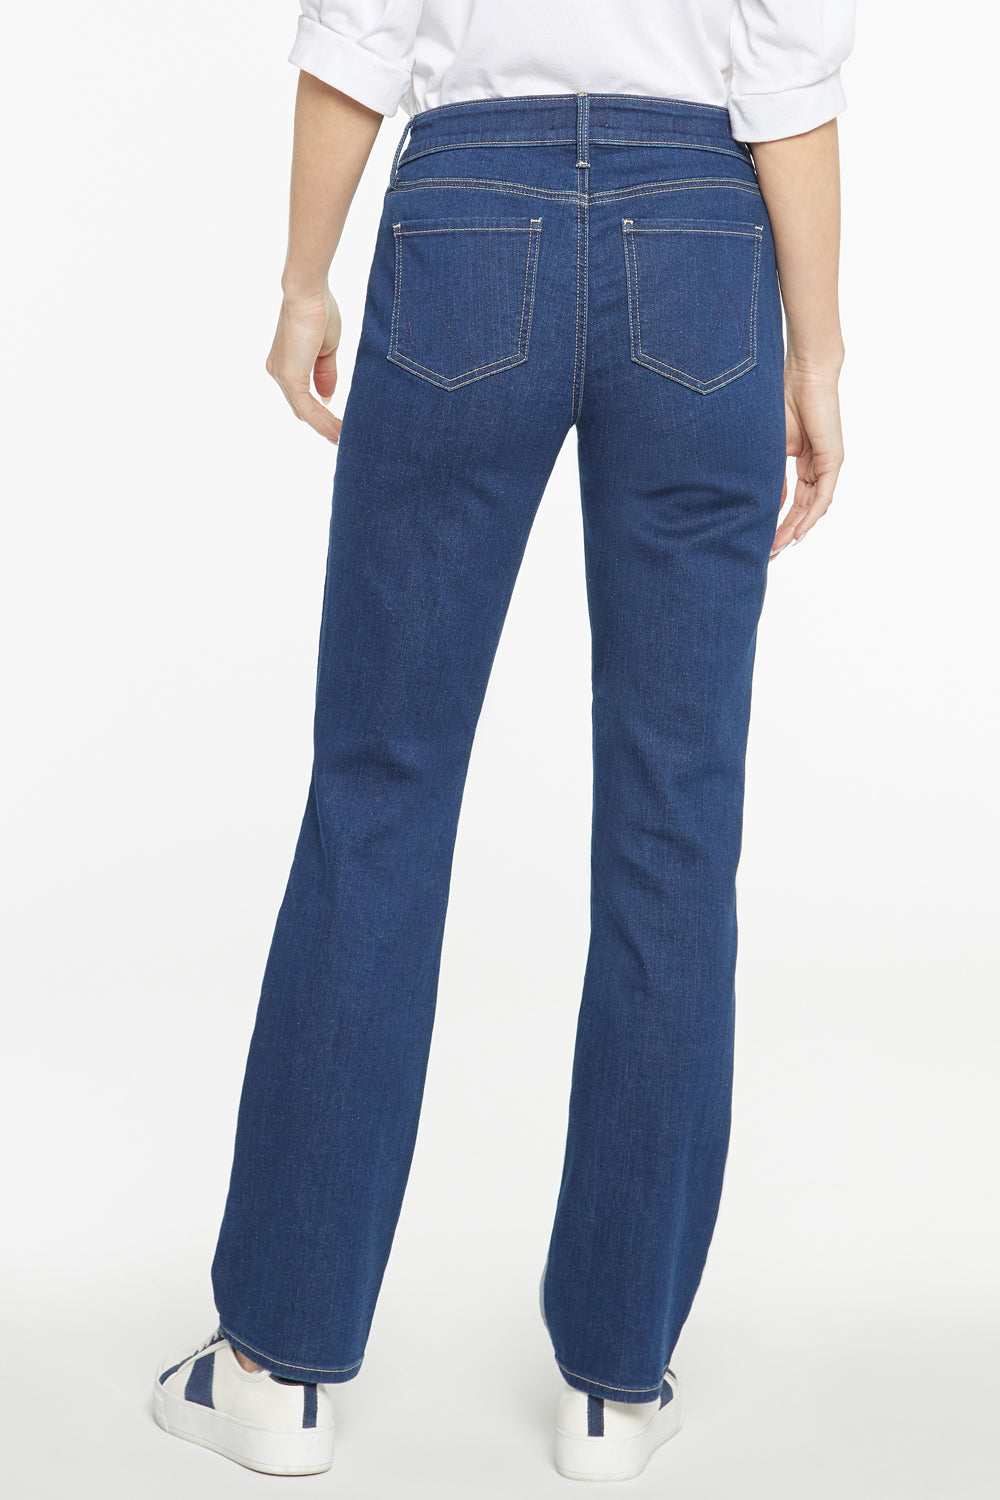 Marilyn Straight Jeans - Eve Blue | NYDJ